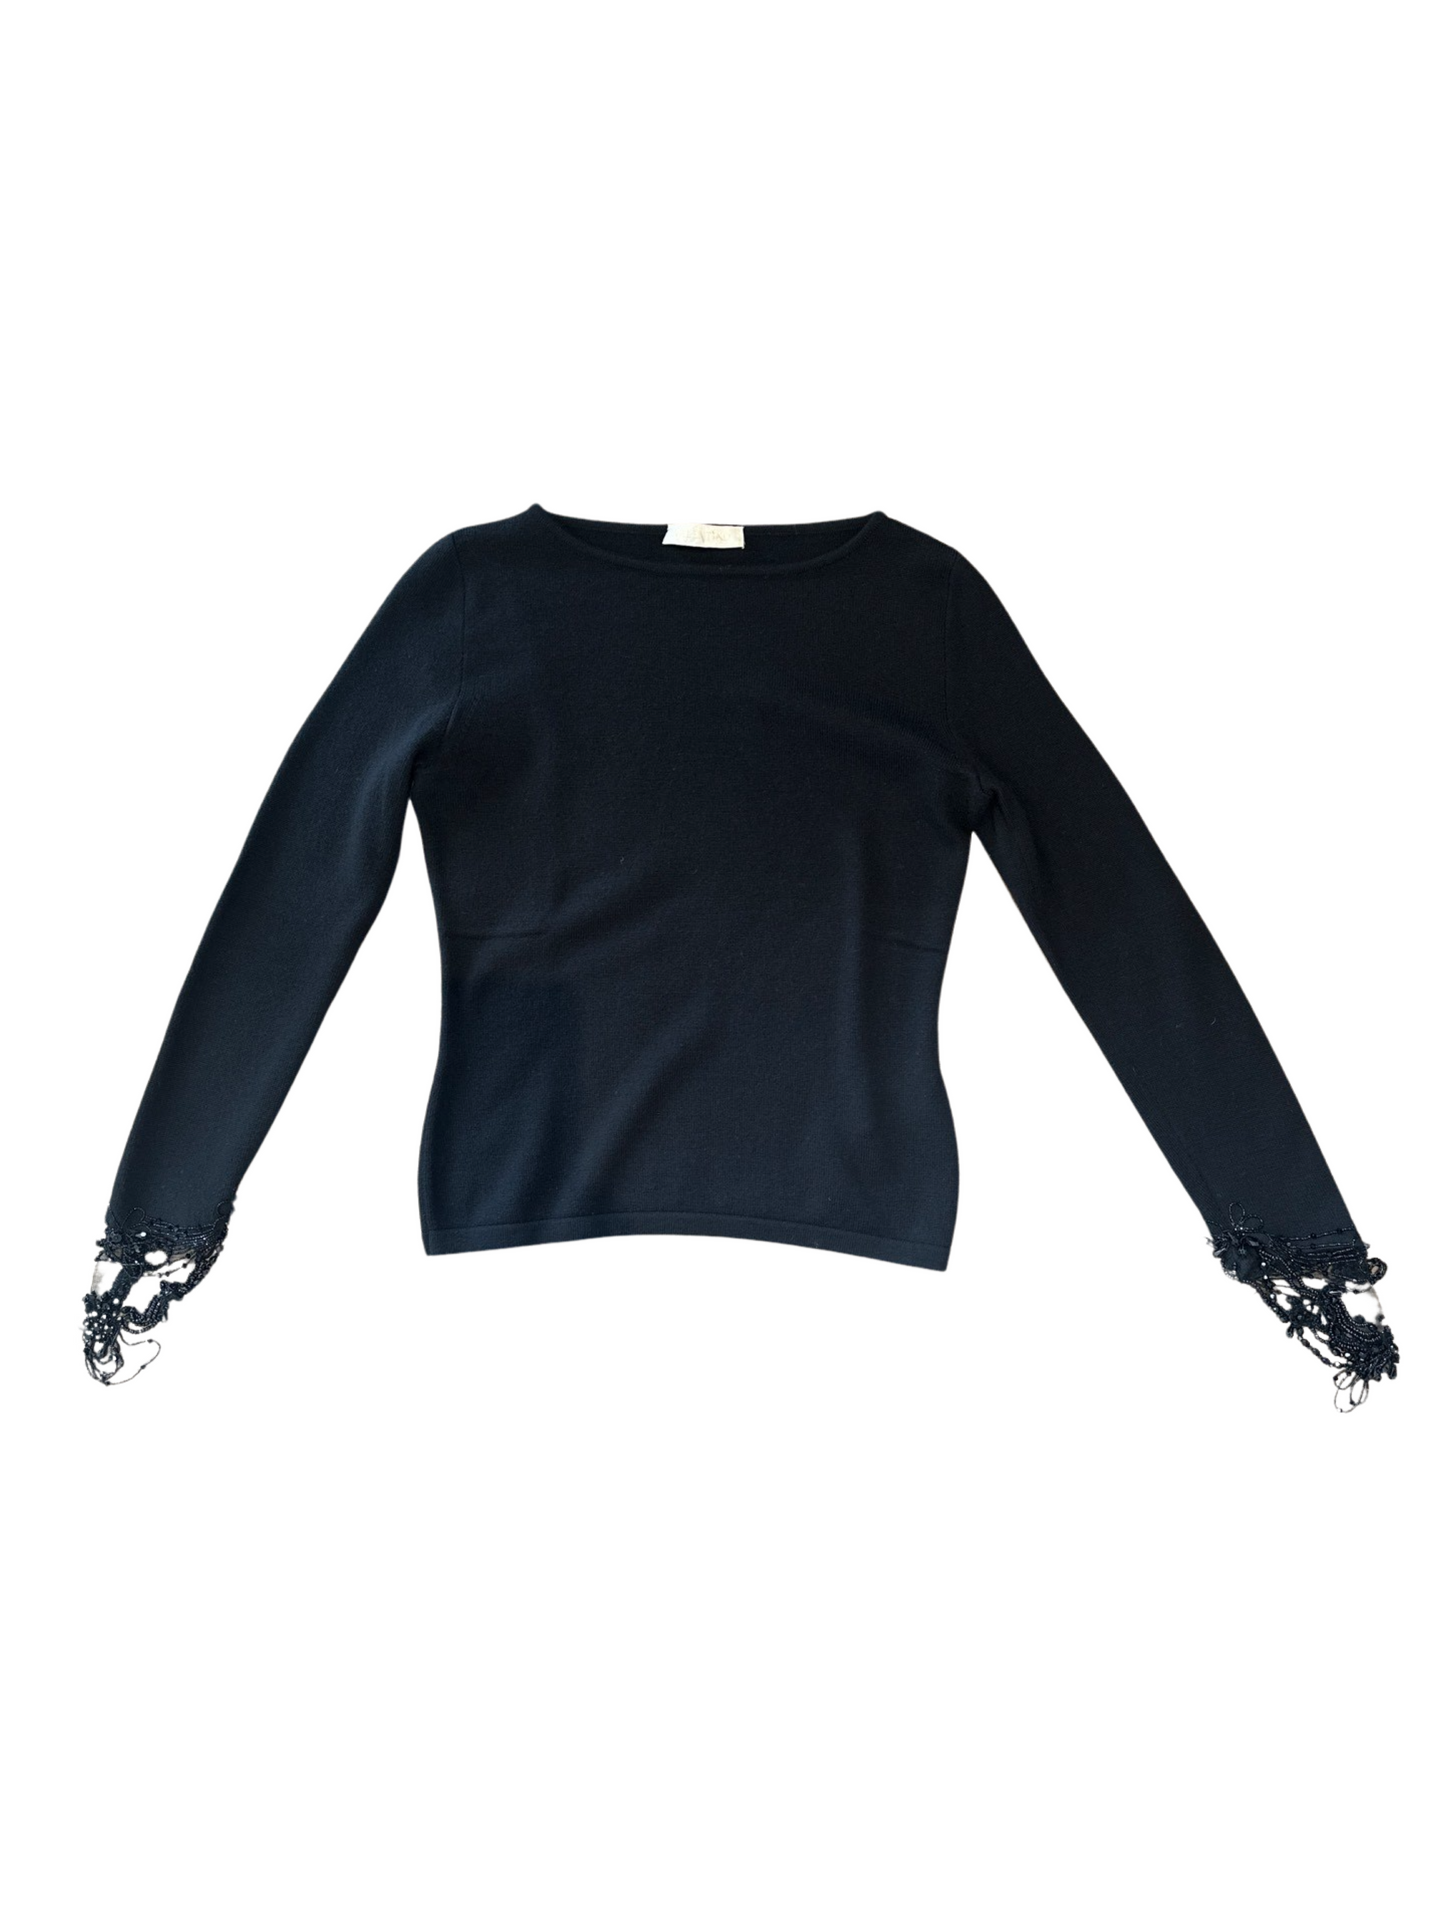 Valentino  Black Cashmere Sweater